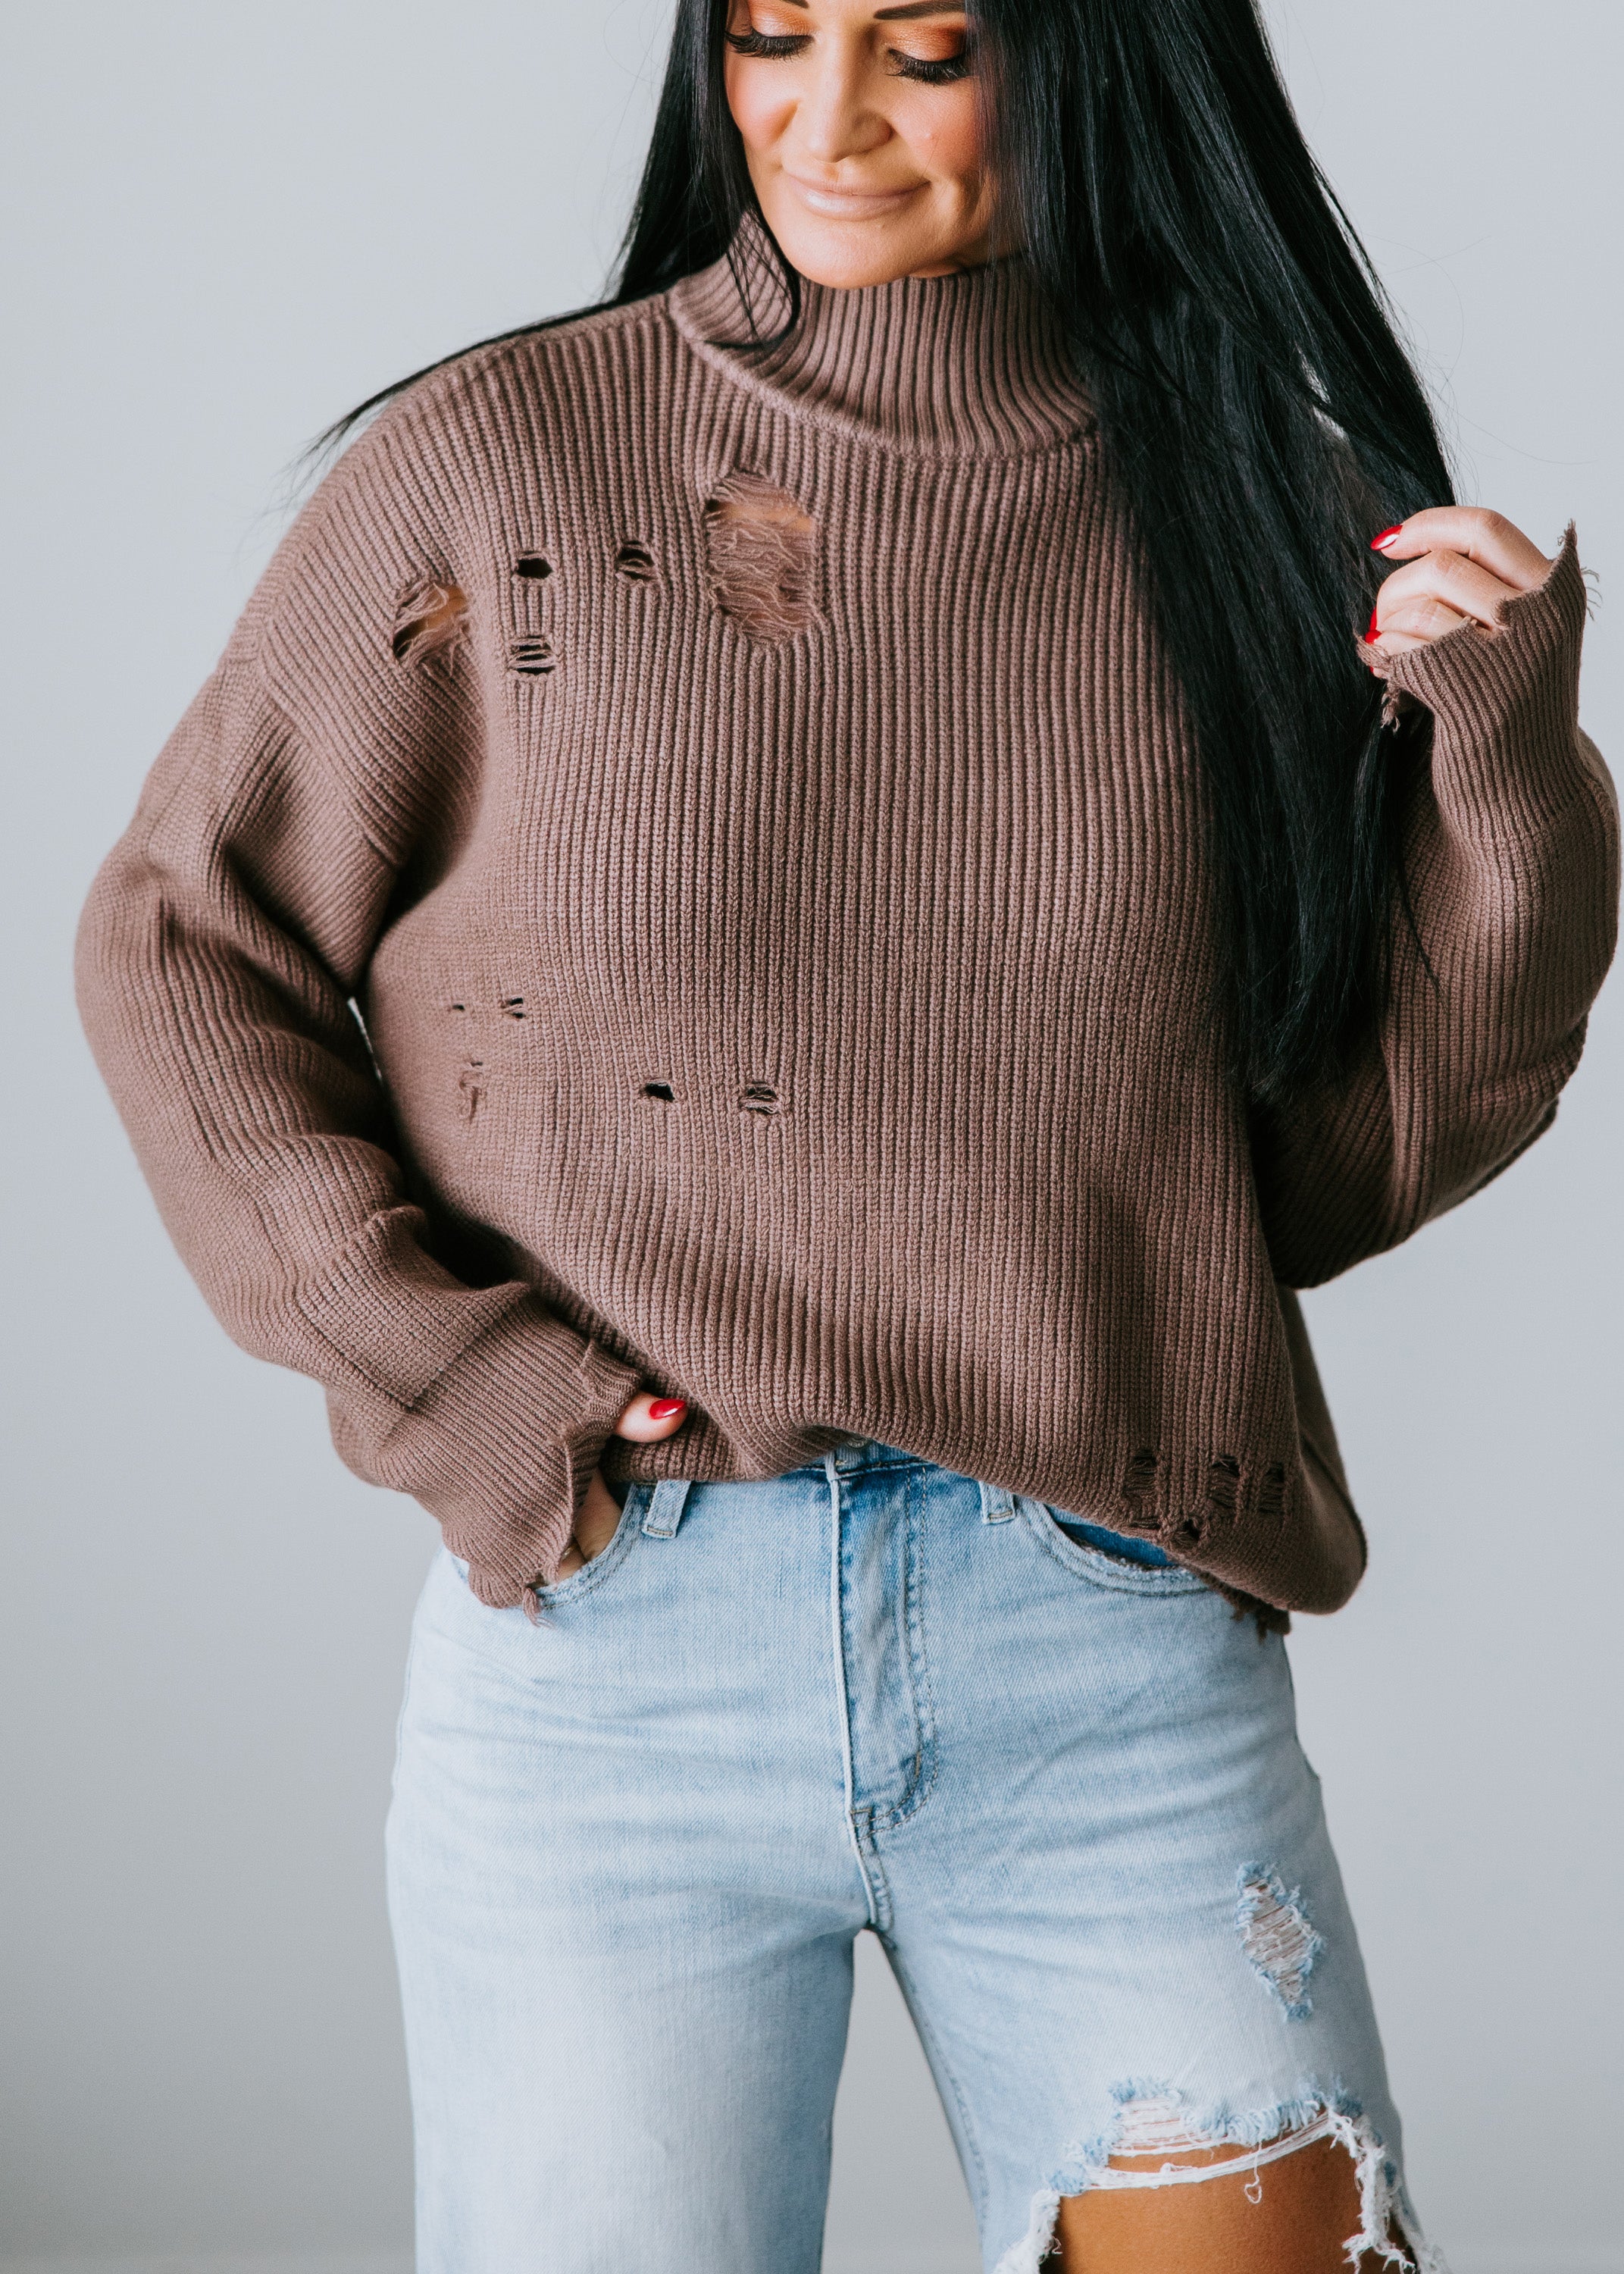 image of Ettie Distressed Sweater by Chelsea DeBoer